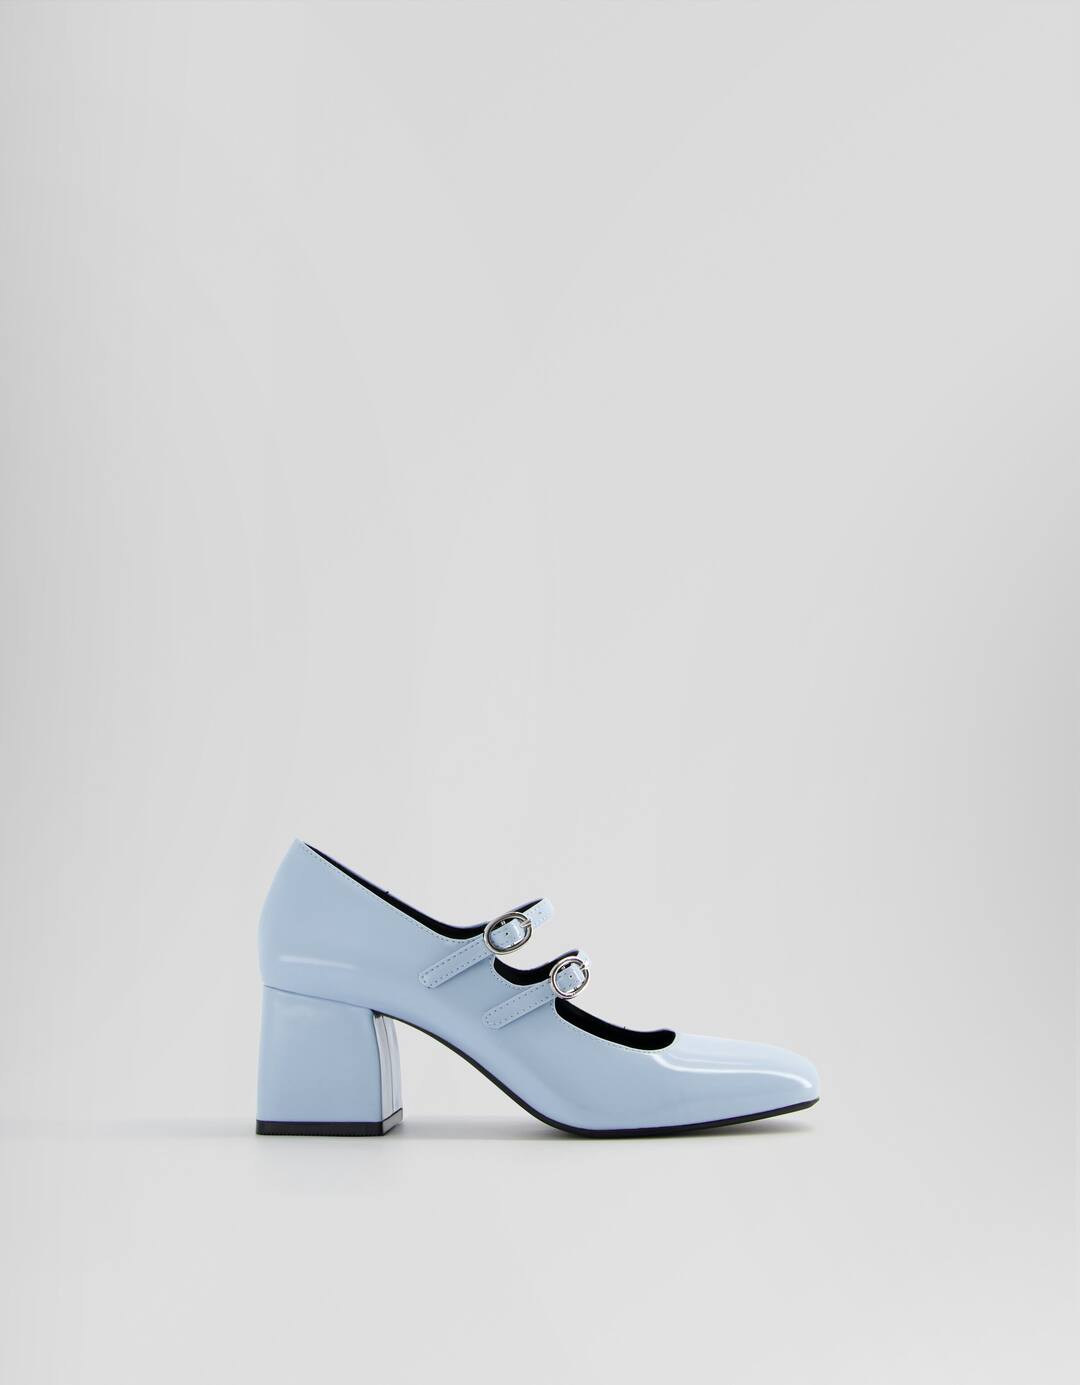 Mary Jane block heel shoes